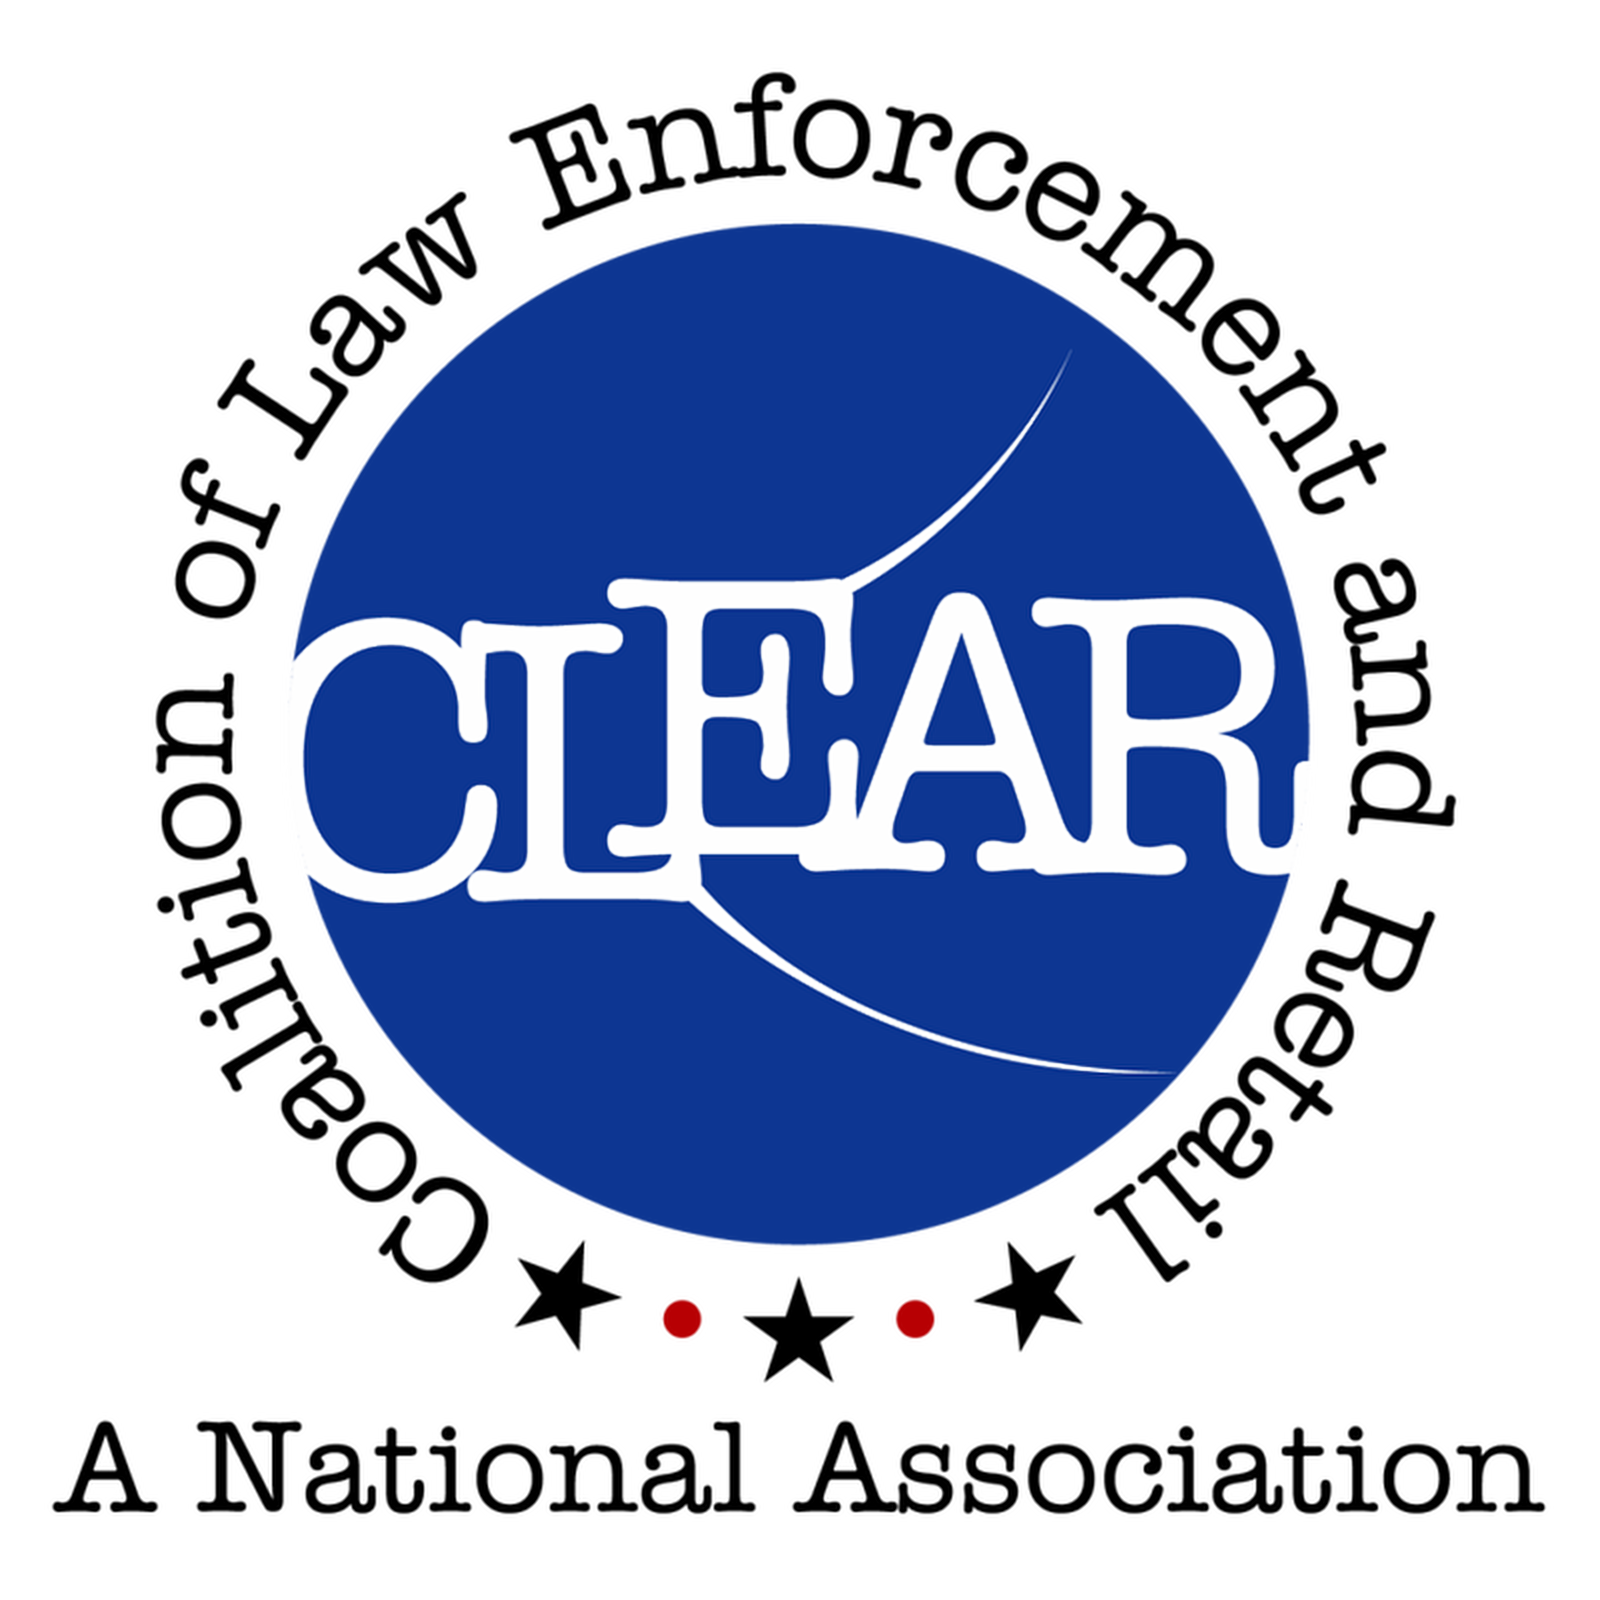 CLEAR logo2.v3